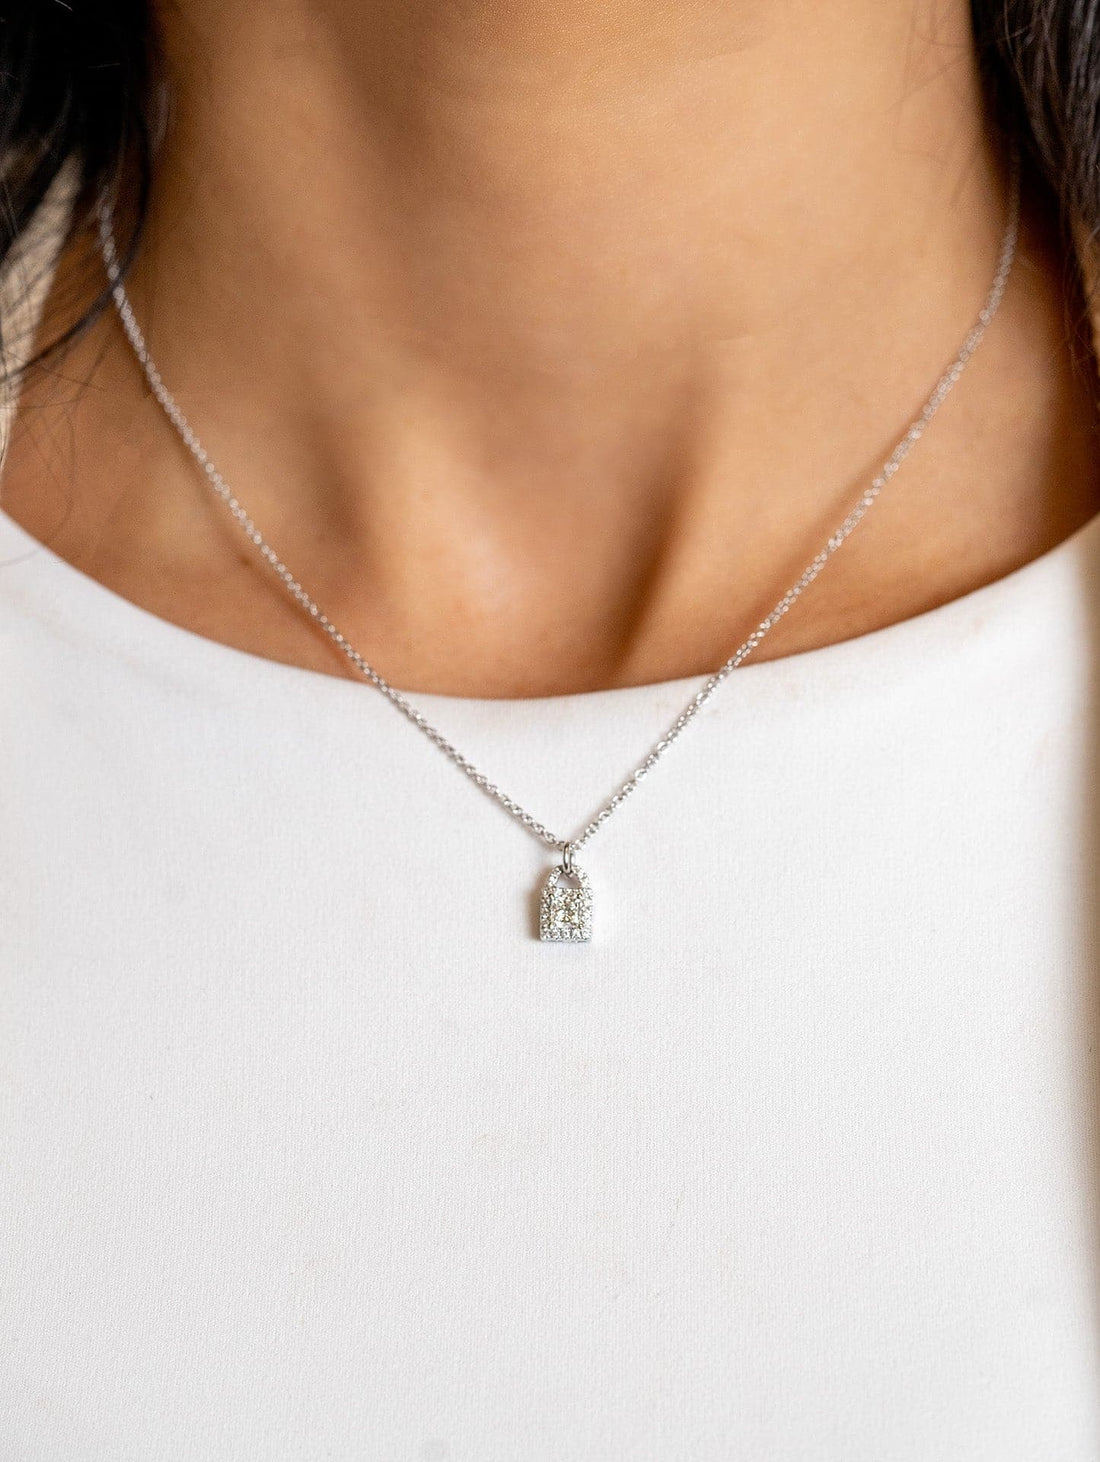 14K Diamond Padlock Necklace 18 Chain + Pendant